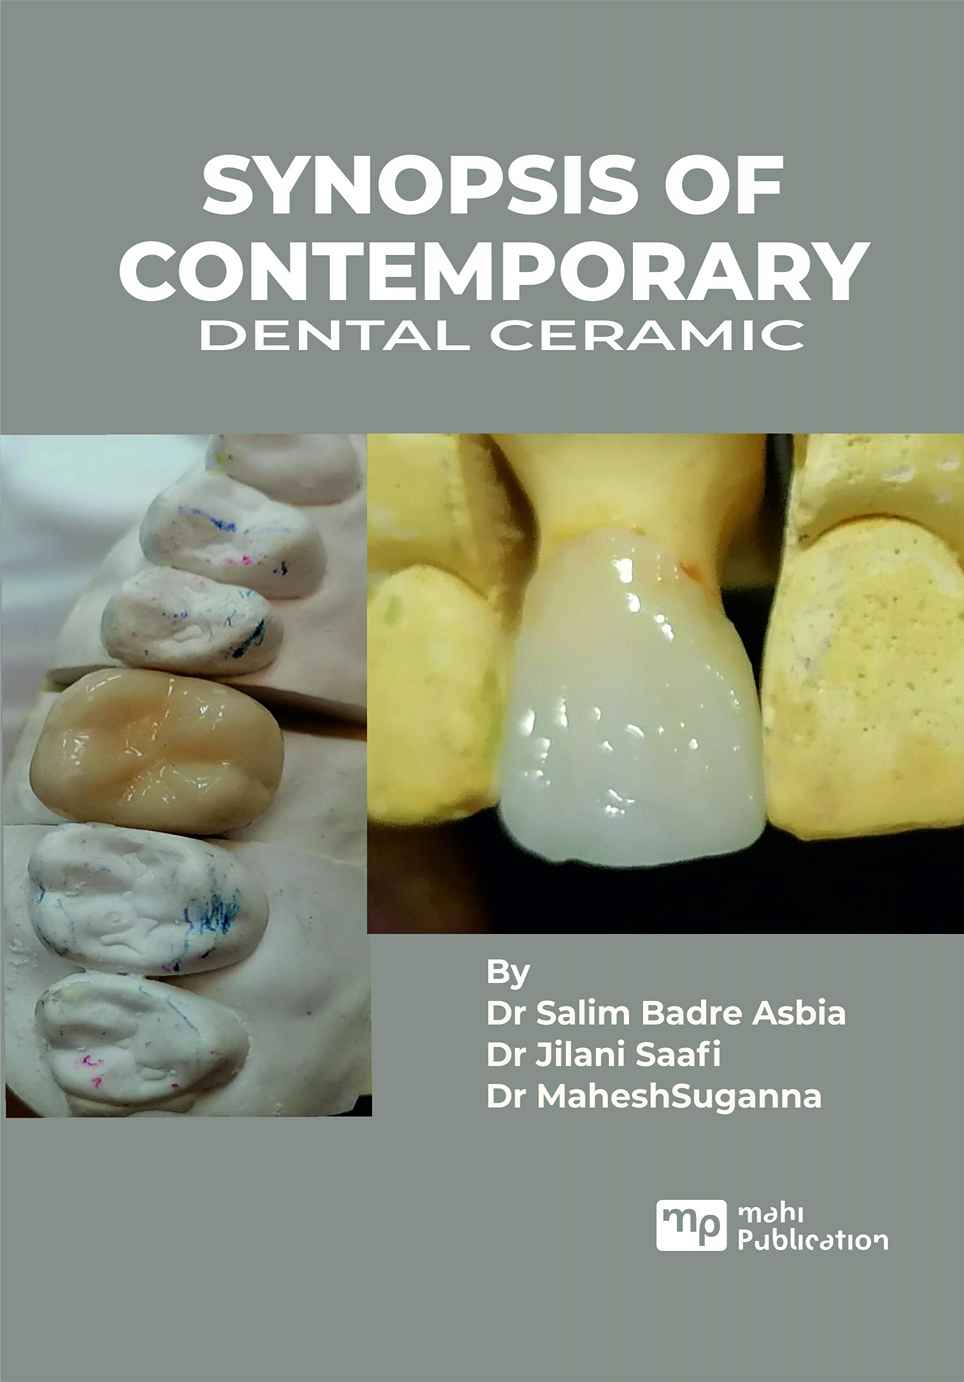 Synopsis of Contemporary Dental Ceramic’s